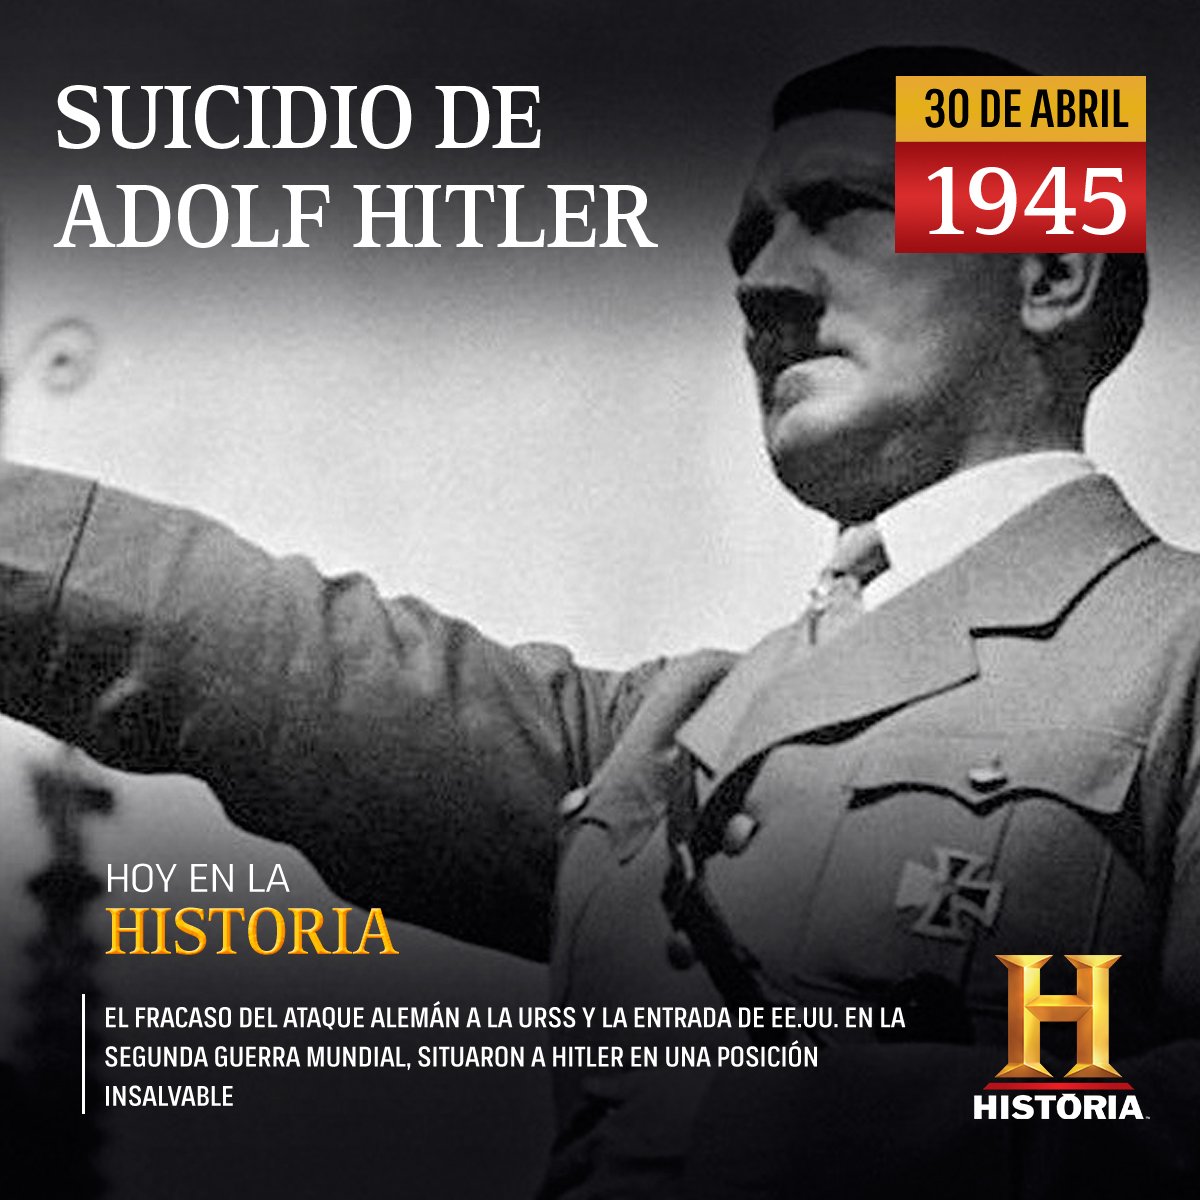 Canal HISTORIA on Twitter: "30 de abril de 1945 Suicidio de Adolf Hitler  Lee toda la efeméride: https://t.co/2qqeFQCAu3 https://t.co/uyTYneS5hf" /  Twitter